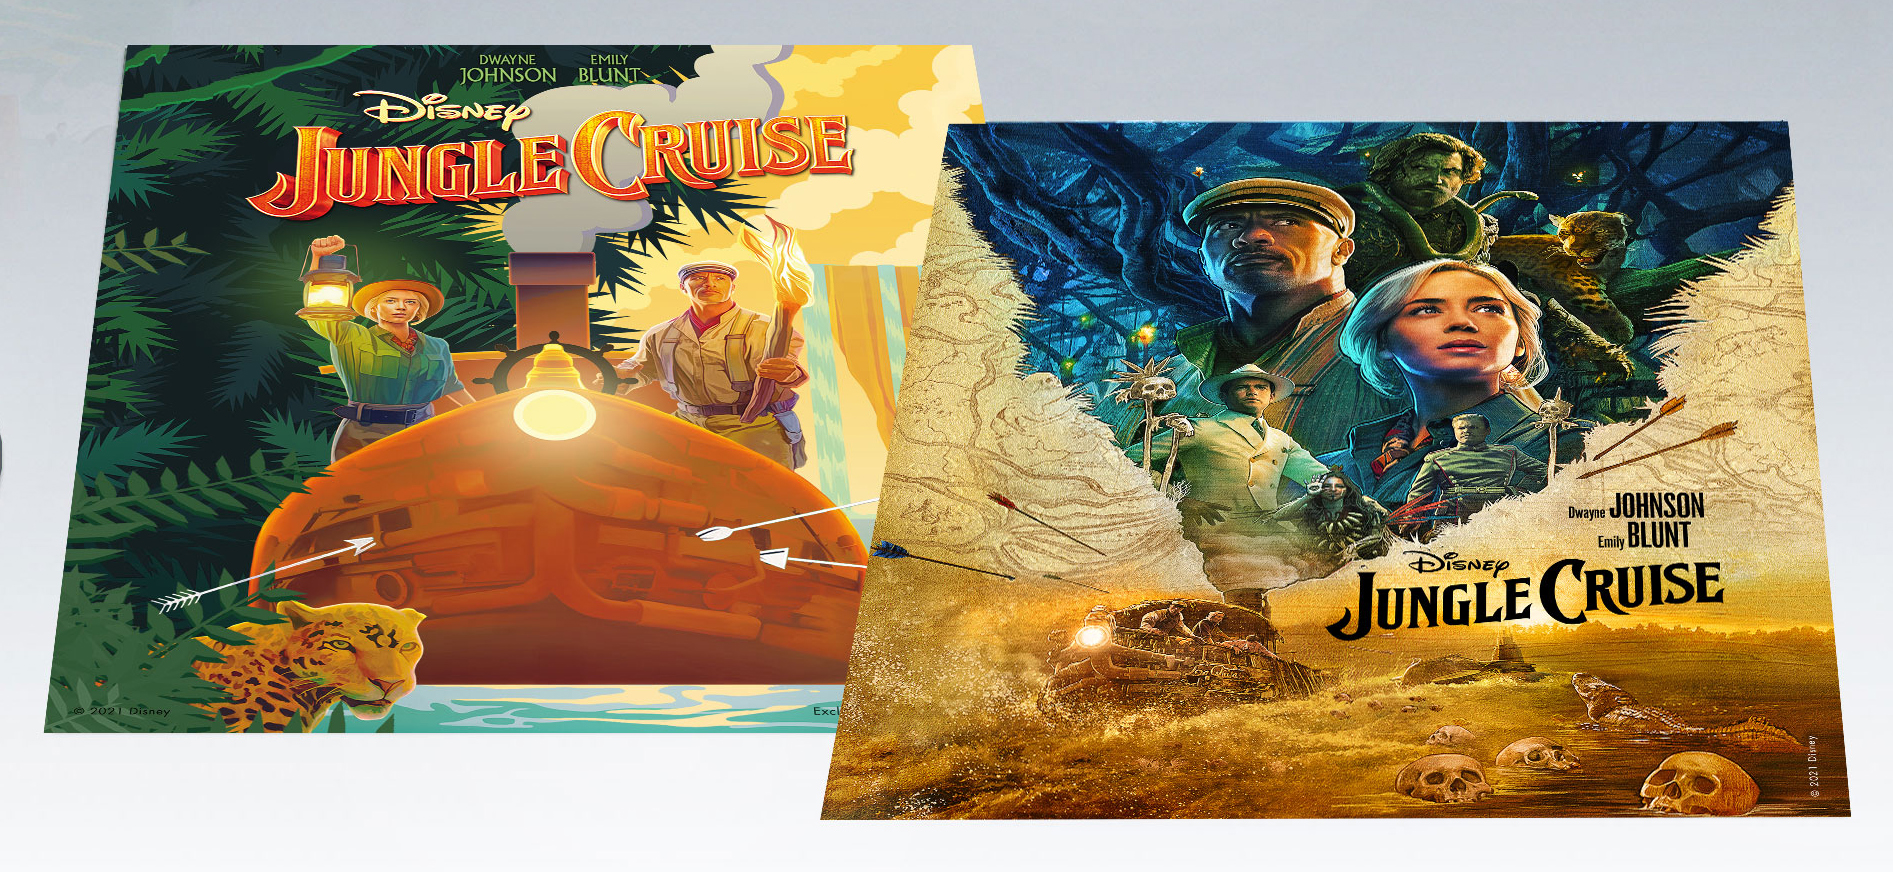 Artwork by Disney Home Entertainment – Jungle Cruise